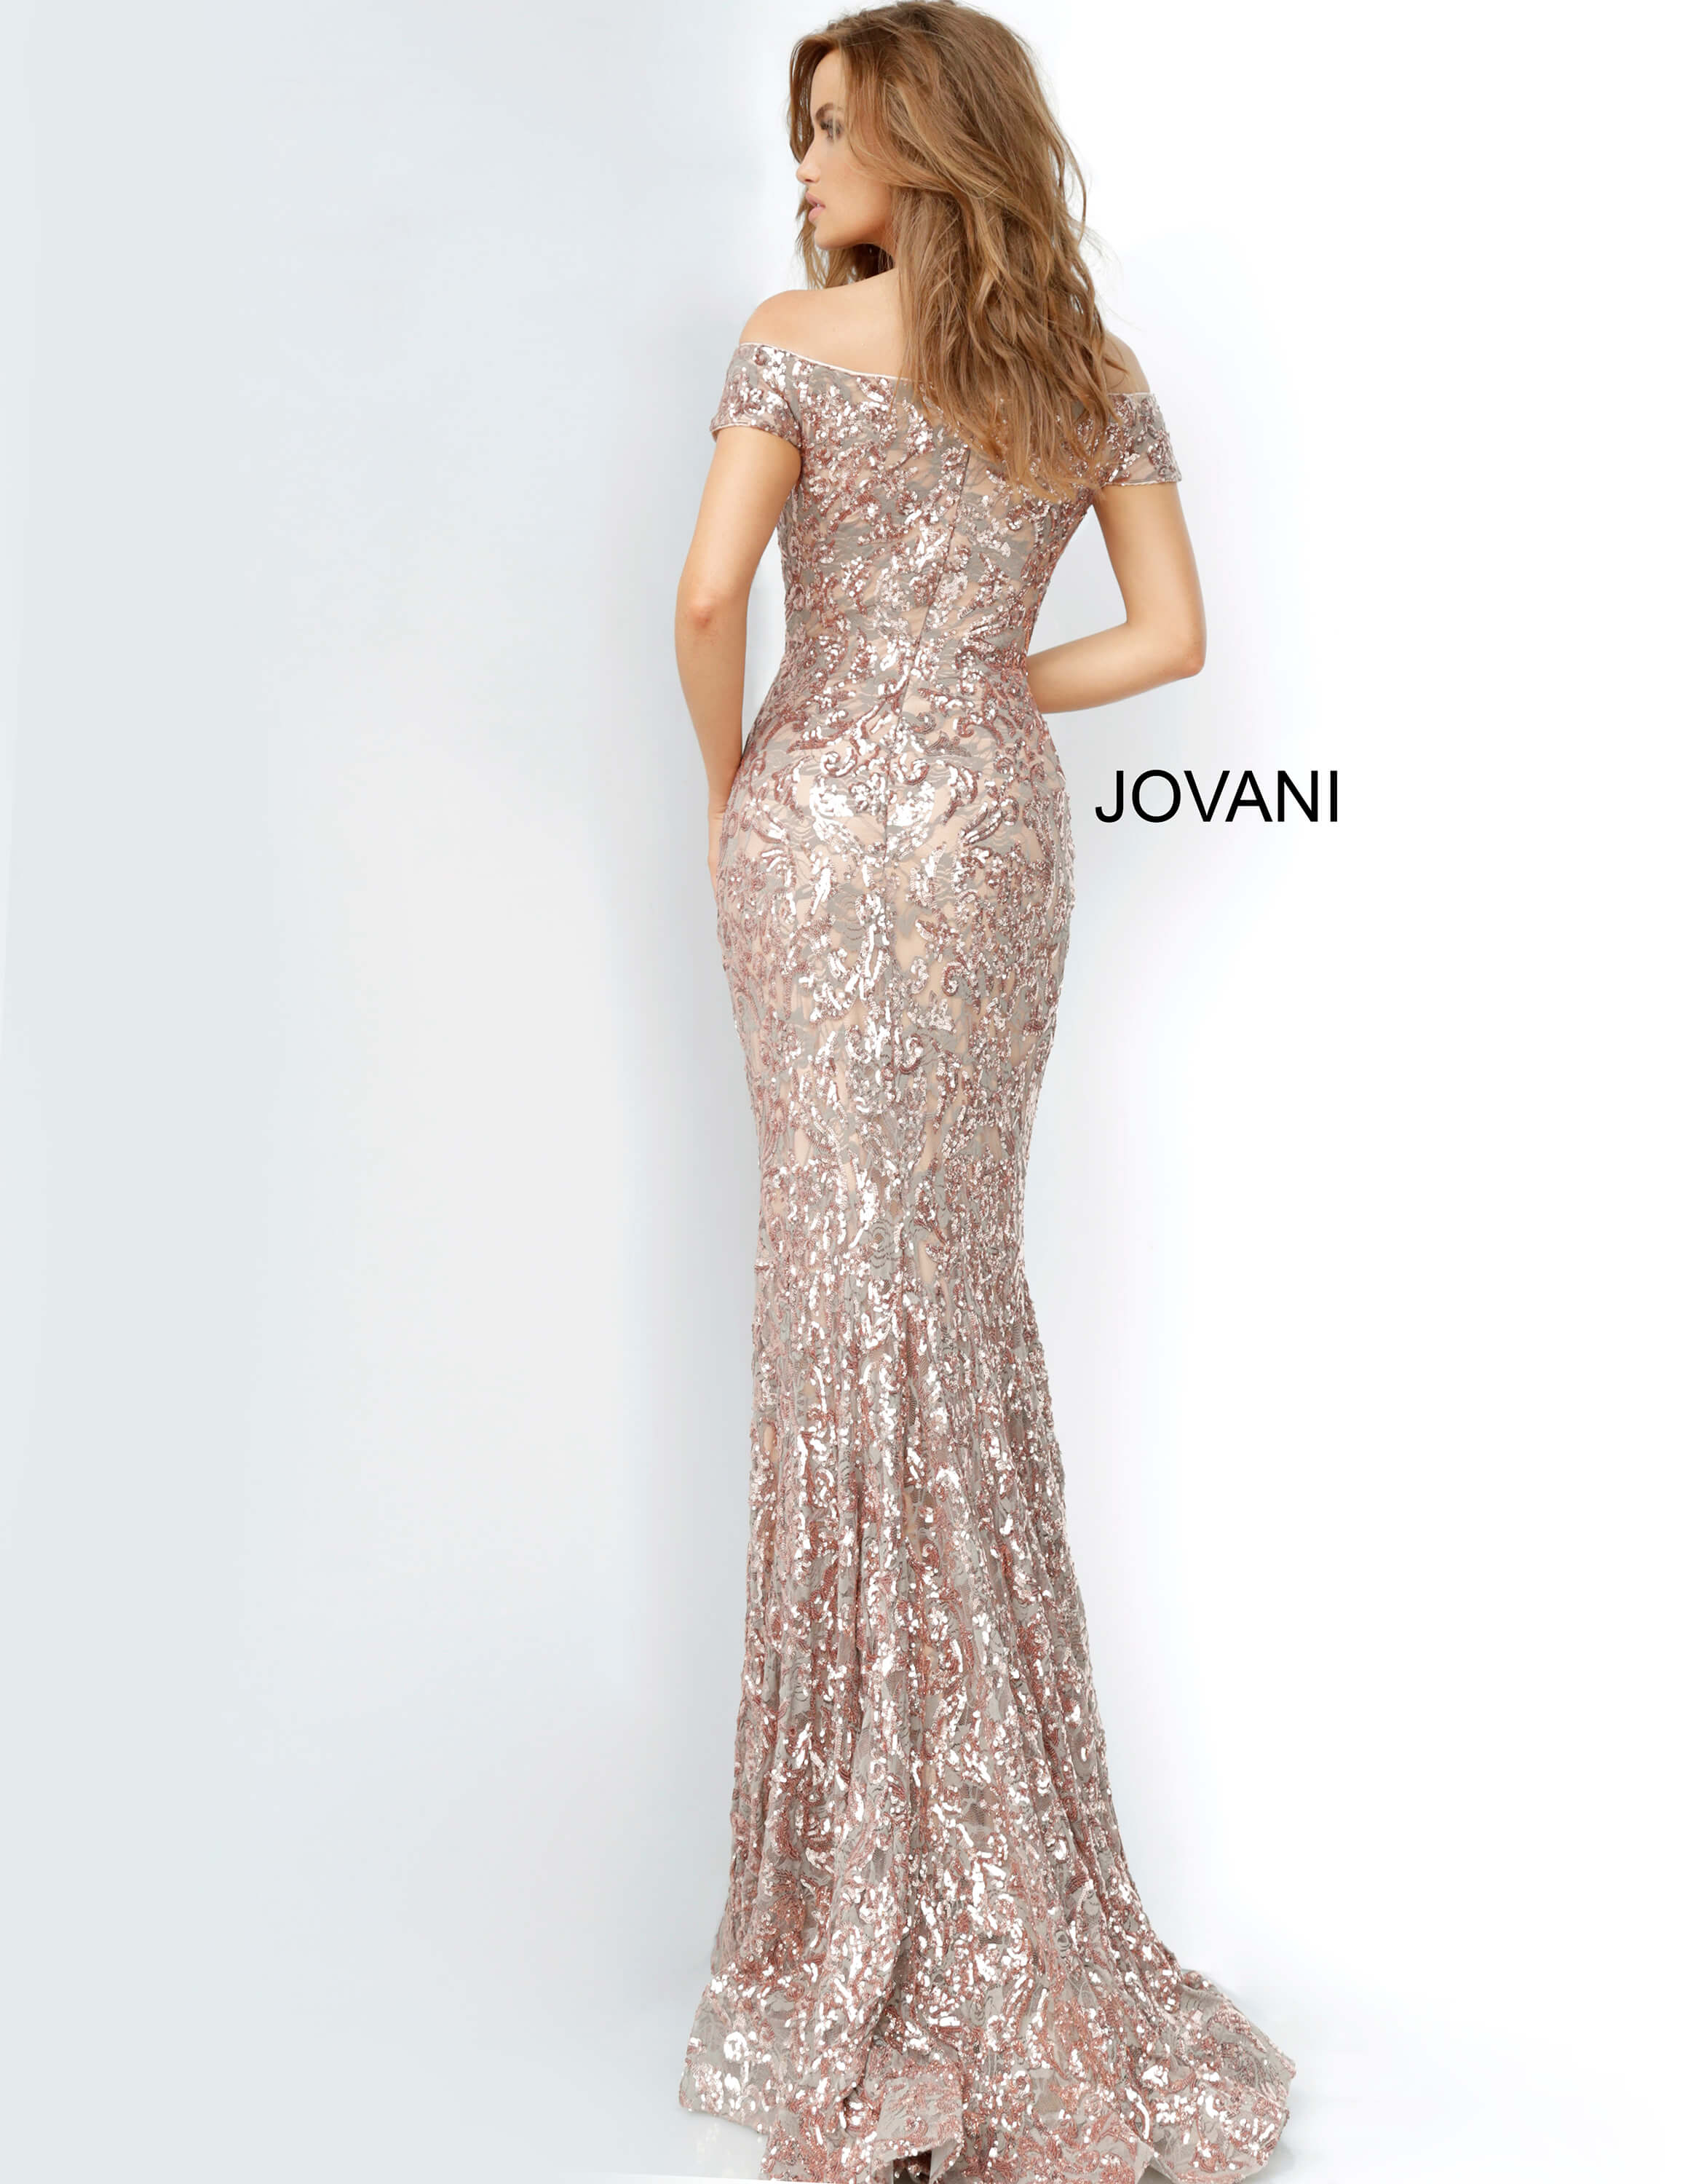 Jovani 1122 off the shoulder mermaid long dress